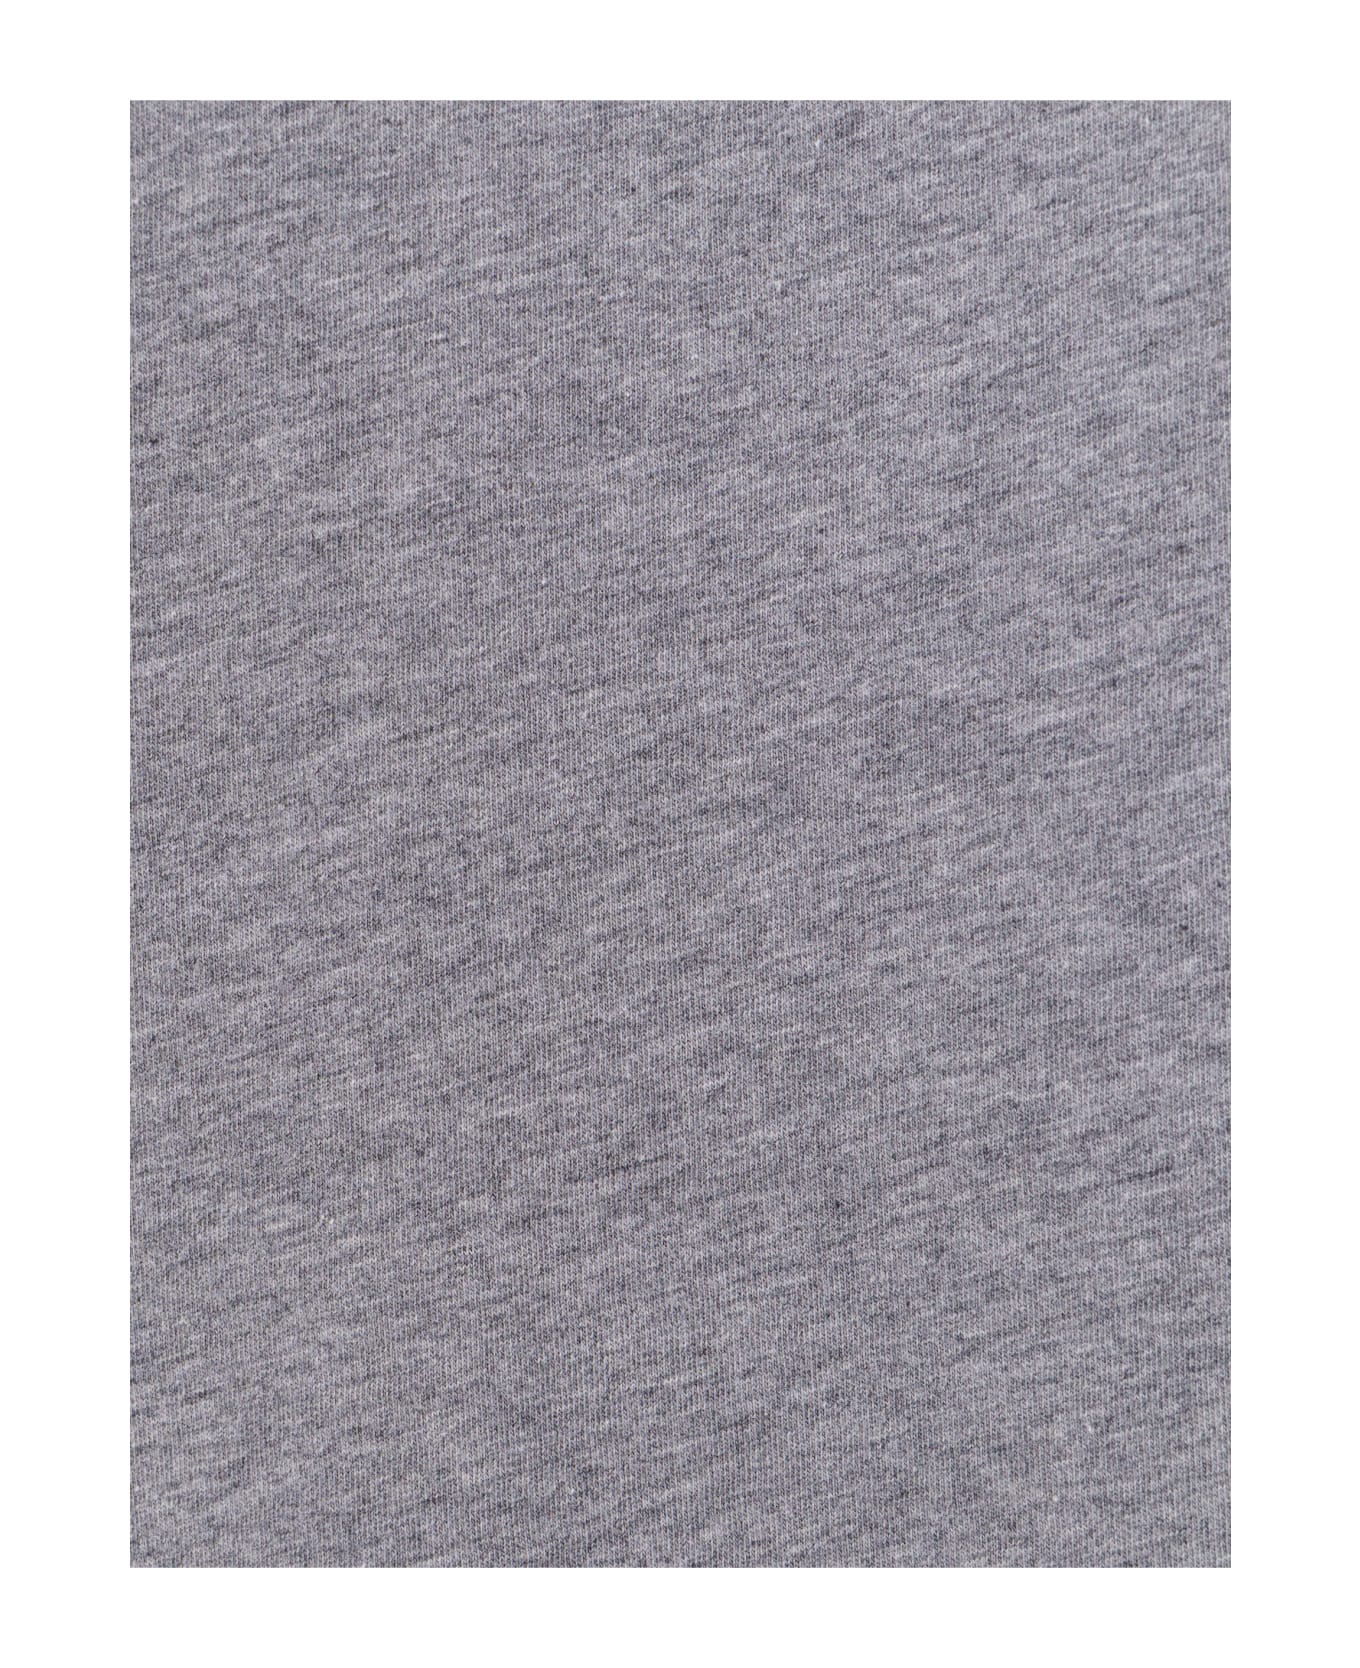 Brunello Cucinelli Contrasting Edges Grey T-shirt - Grey